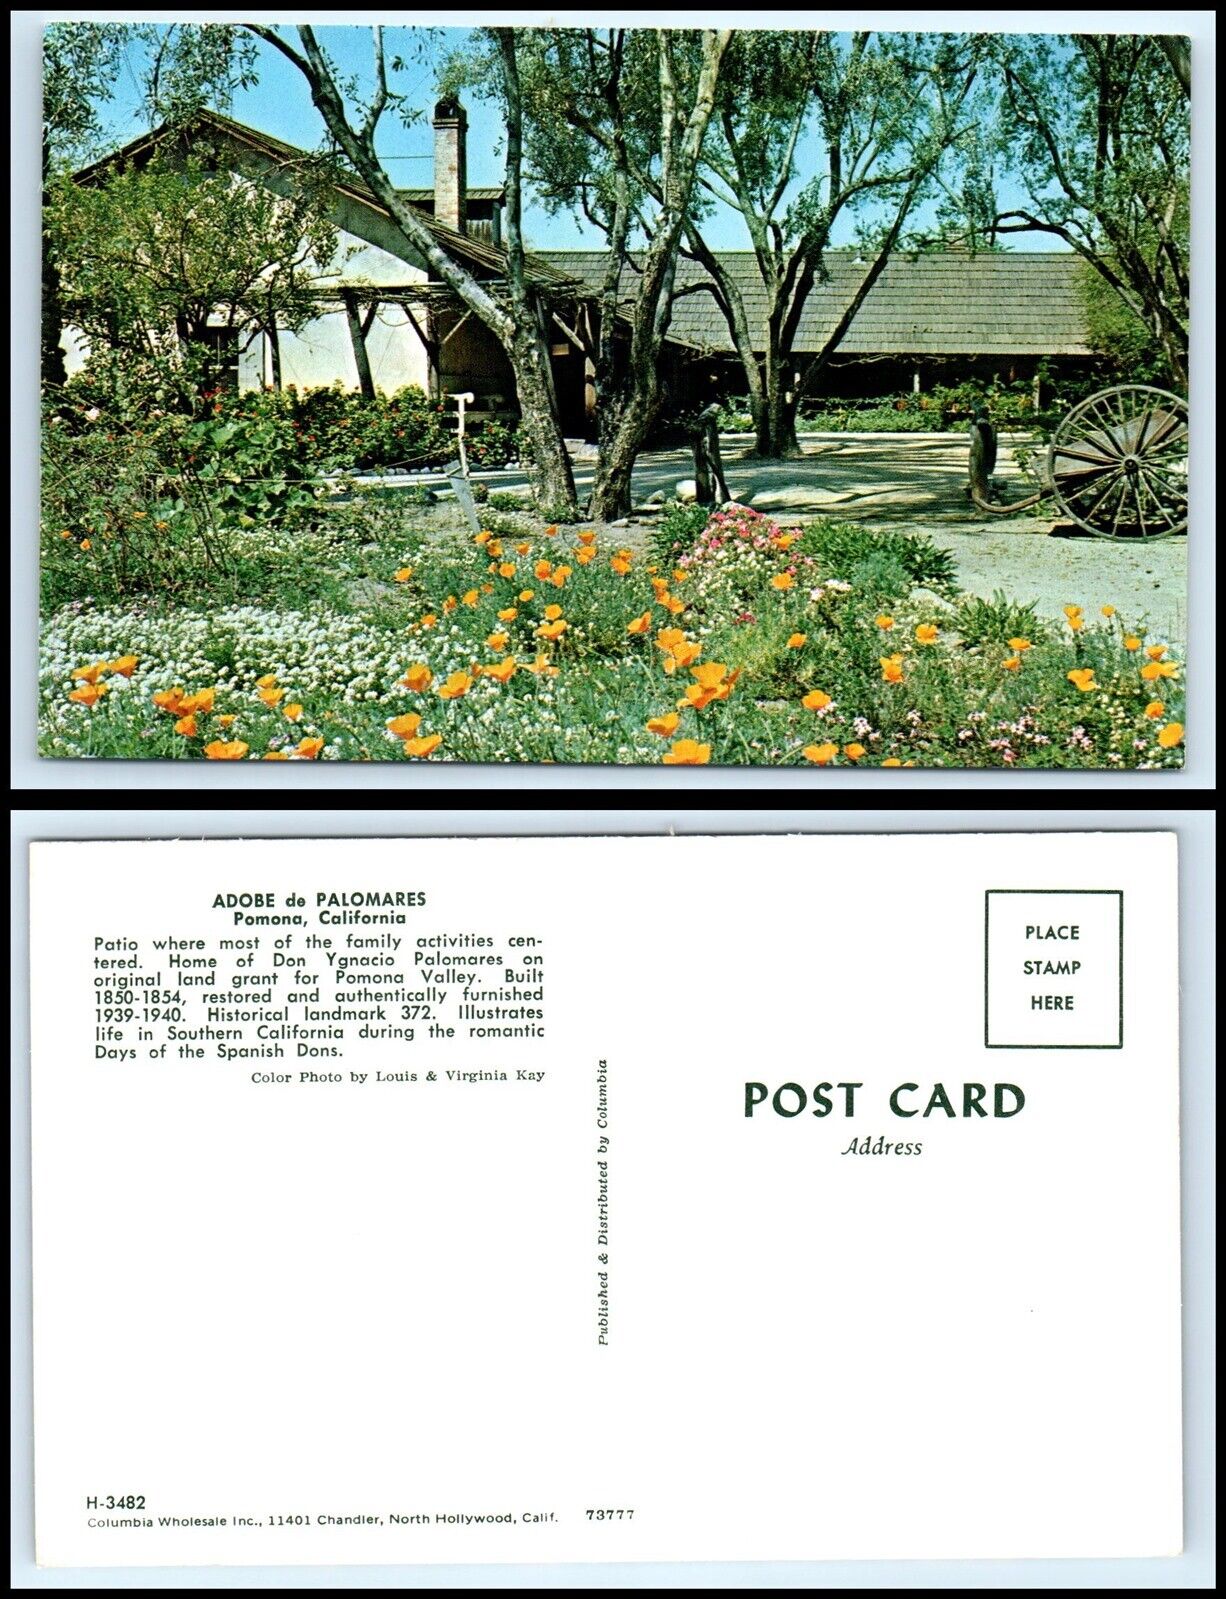 CALIFORNIA Postcard - Pomona, Adobe de Palomares P35